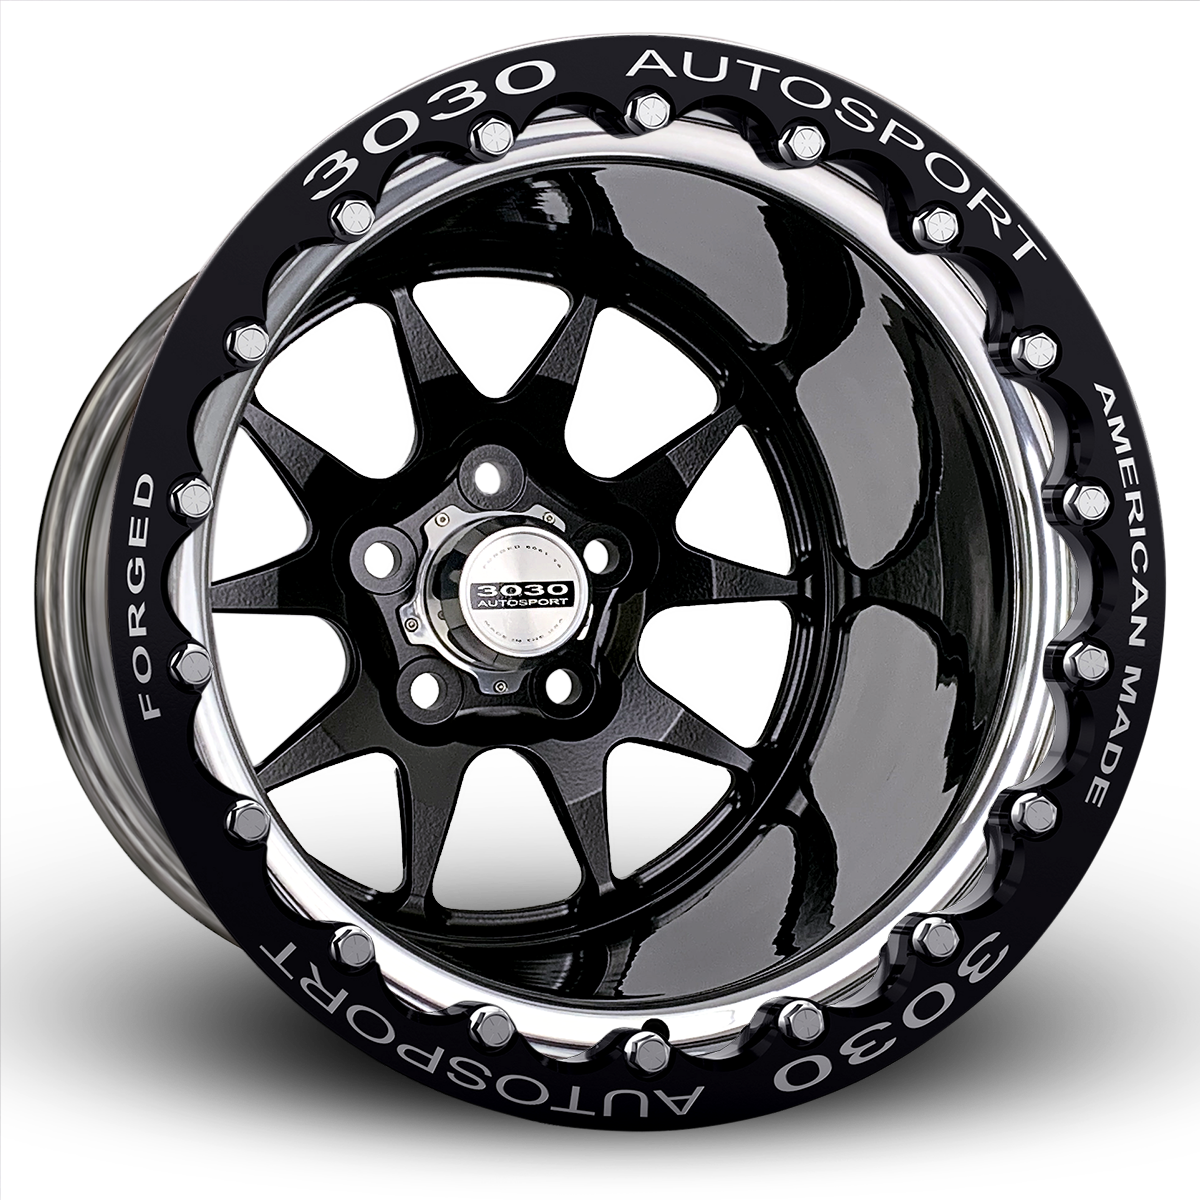 MACH-10 Double-Beadlock Wheel, Size: 15x12", Bolt Pattern: 5x4.75", Backspace: 4" [Black/Polished]